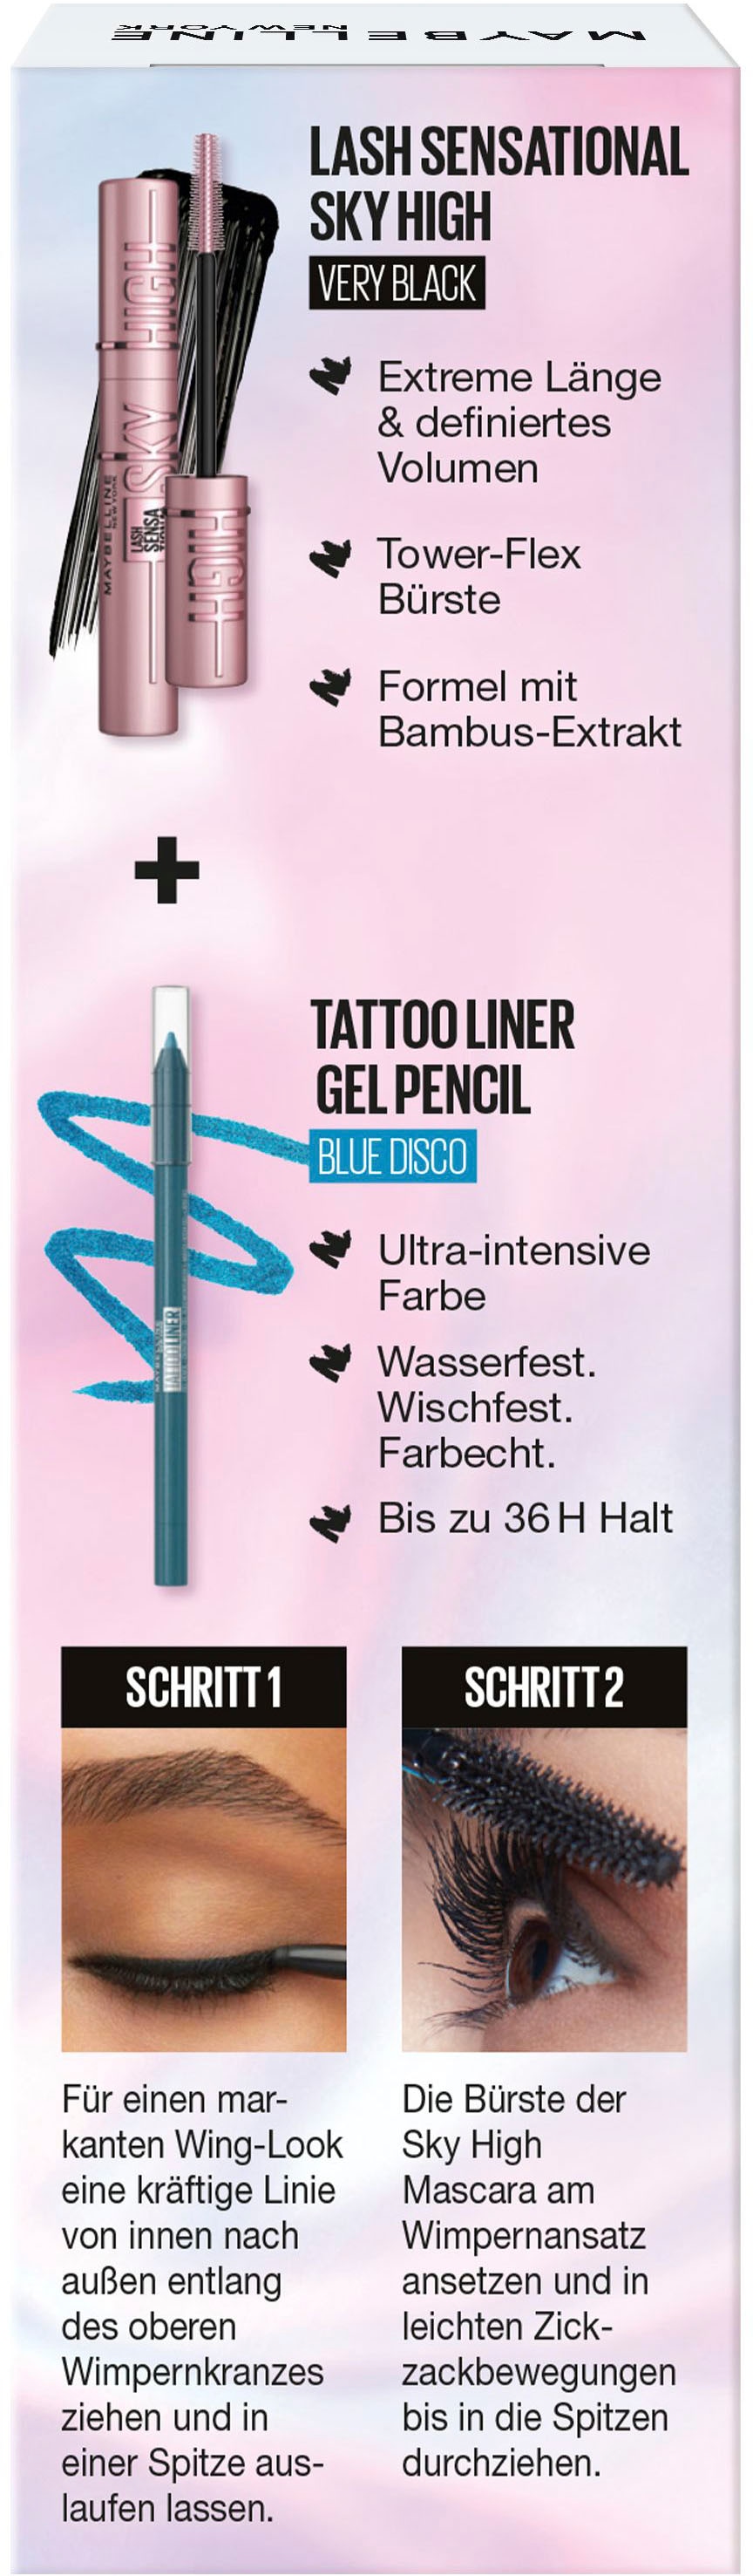 New High »Maybelline Liner NEW online + Sky Mascara Gel OTTO MAYBELLINE Pencil« York Tattoo YORK bei